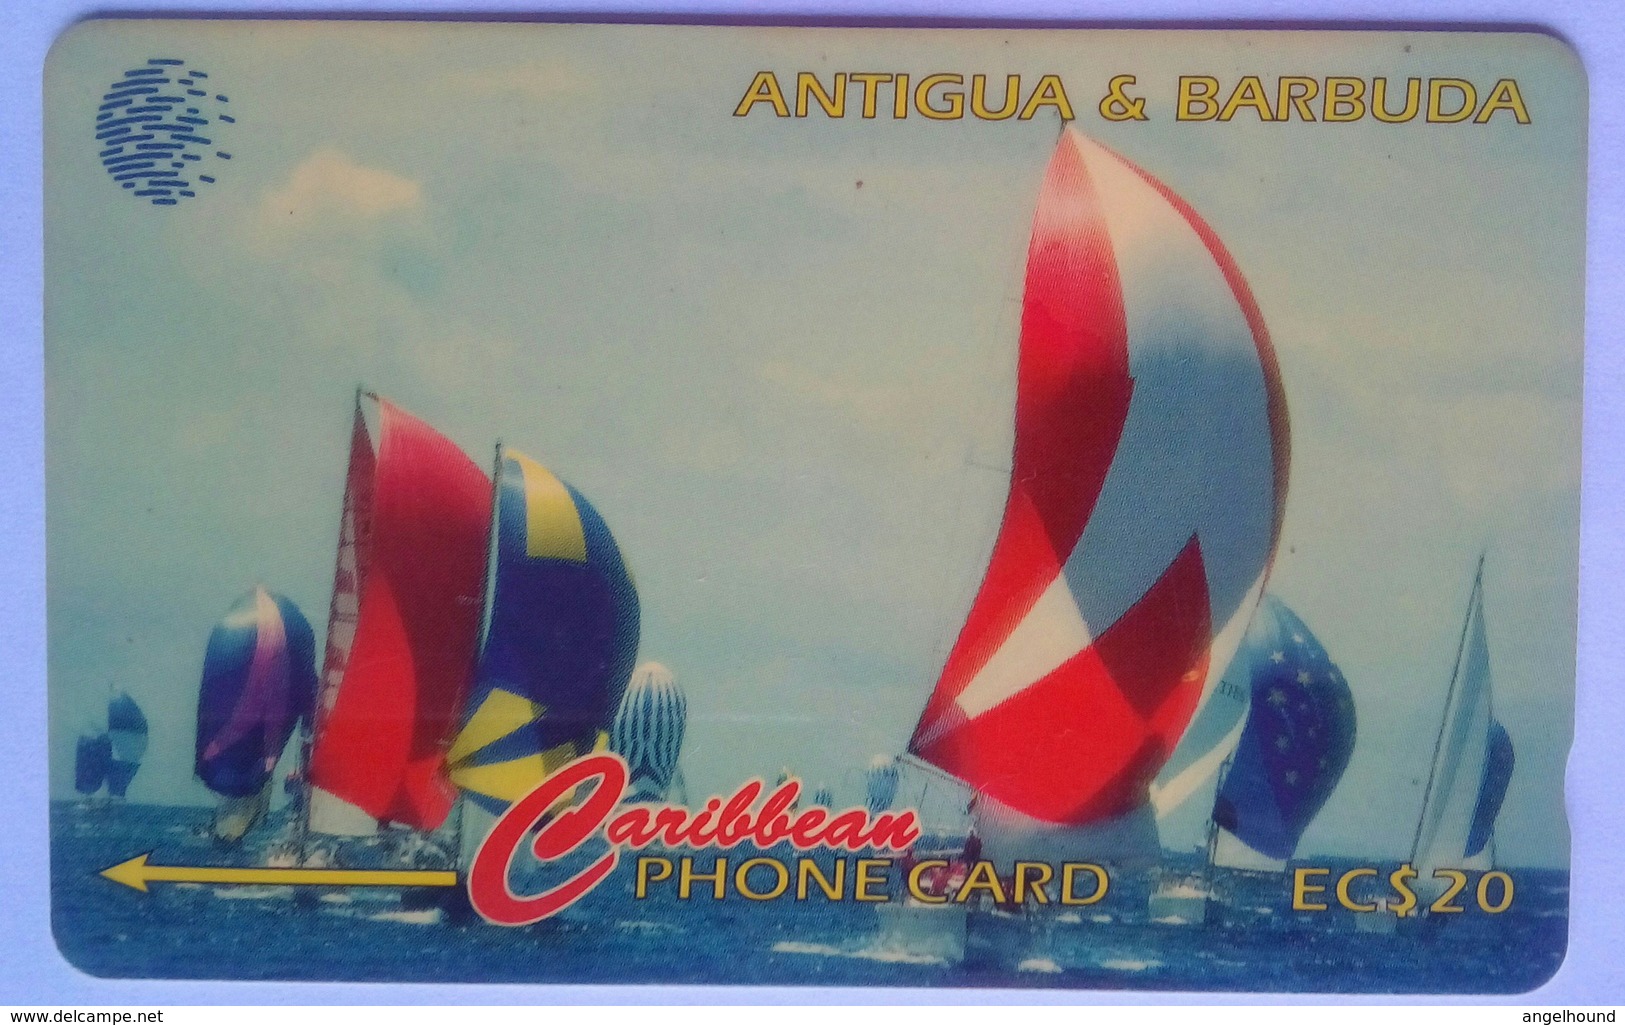 EC$20 239CATC Sailing Week 1997 - Antigua Et Barbuda